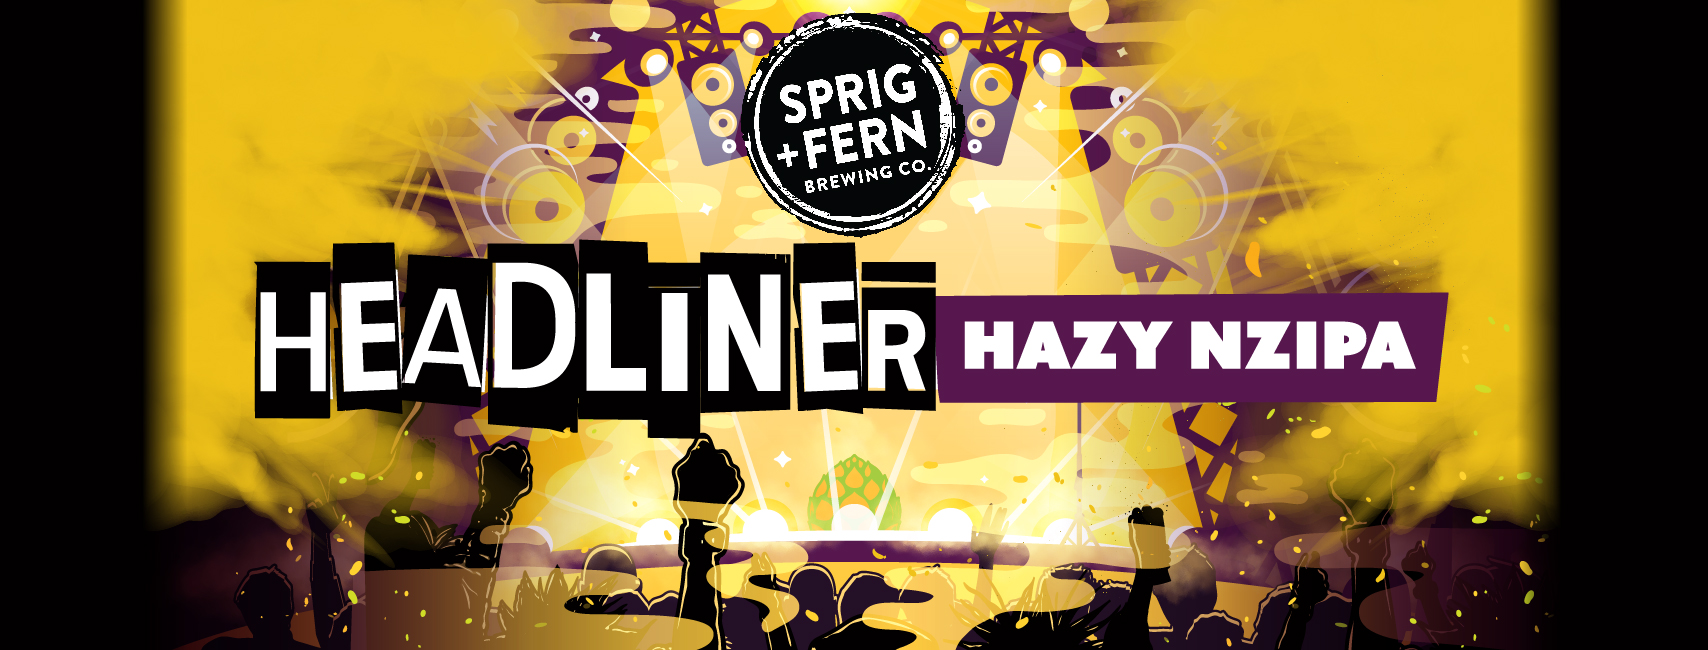 The artwork for Sprig and Fern's Headliner Hazy NZIPA beer